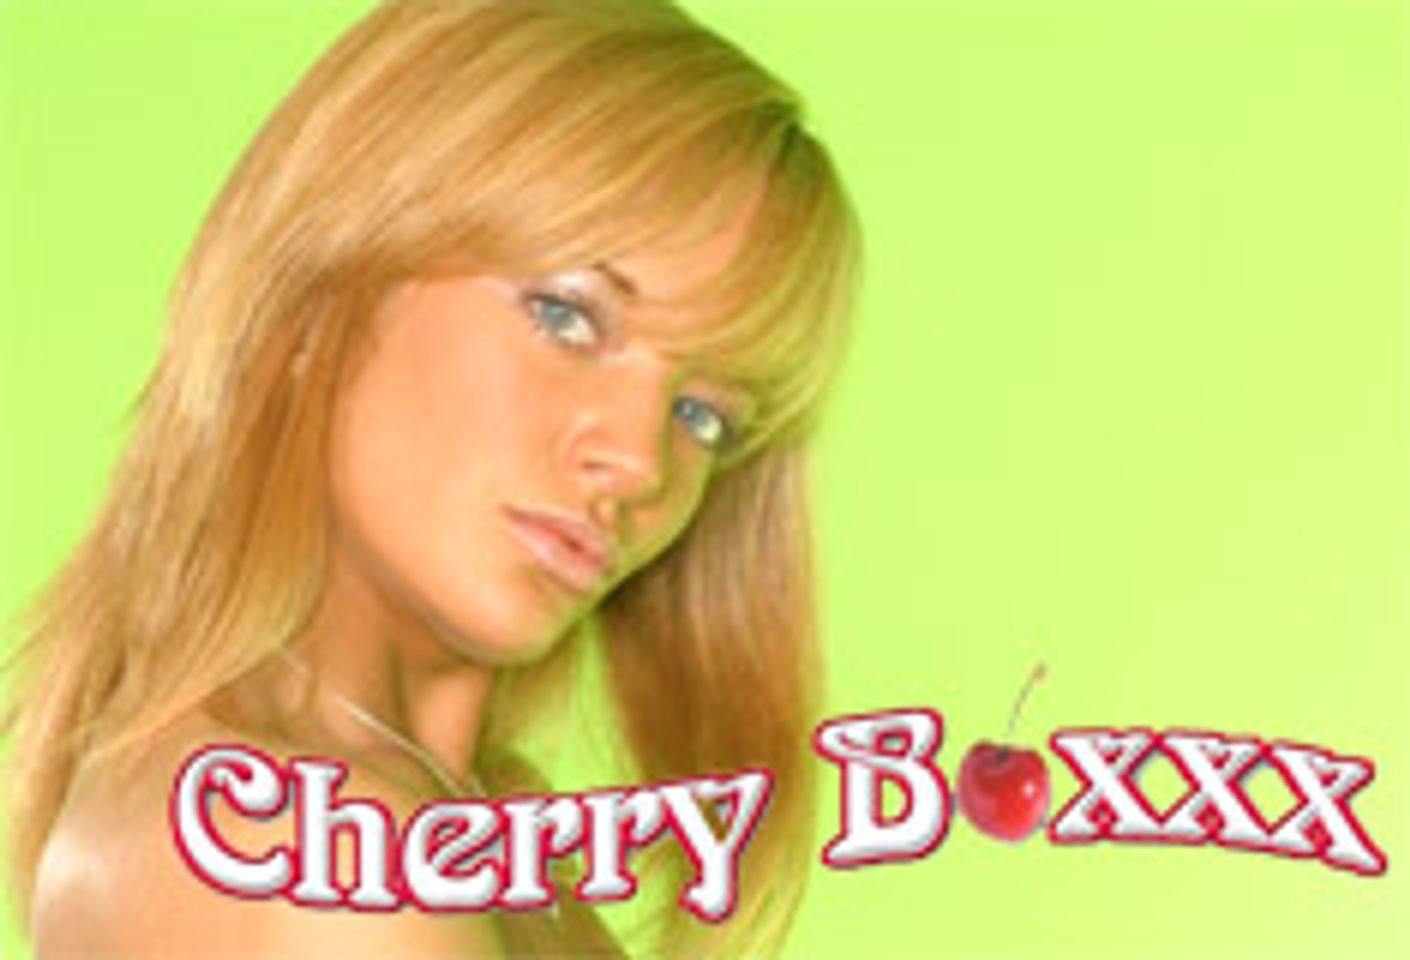 GiGi Enters Deal with Cherry Boxxx